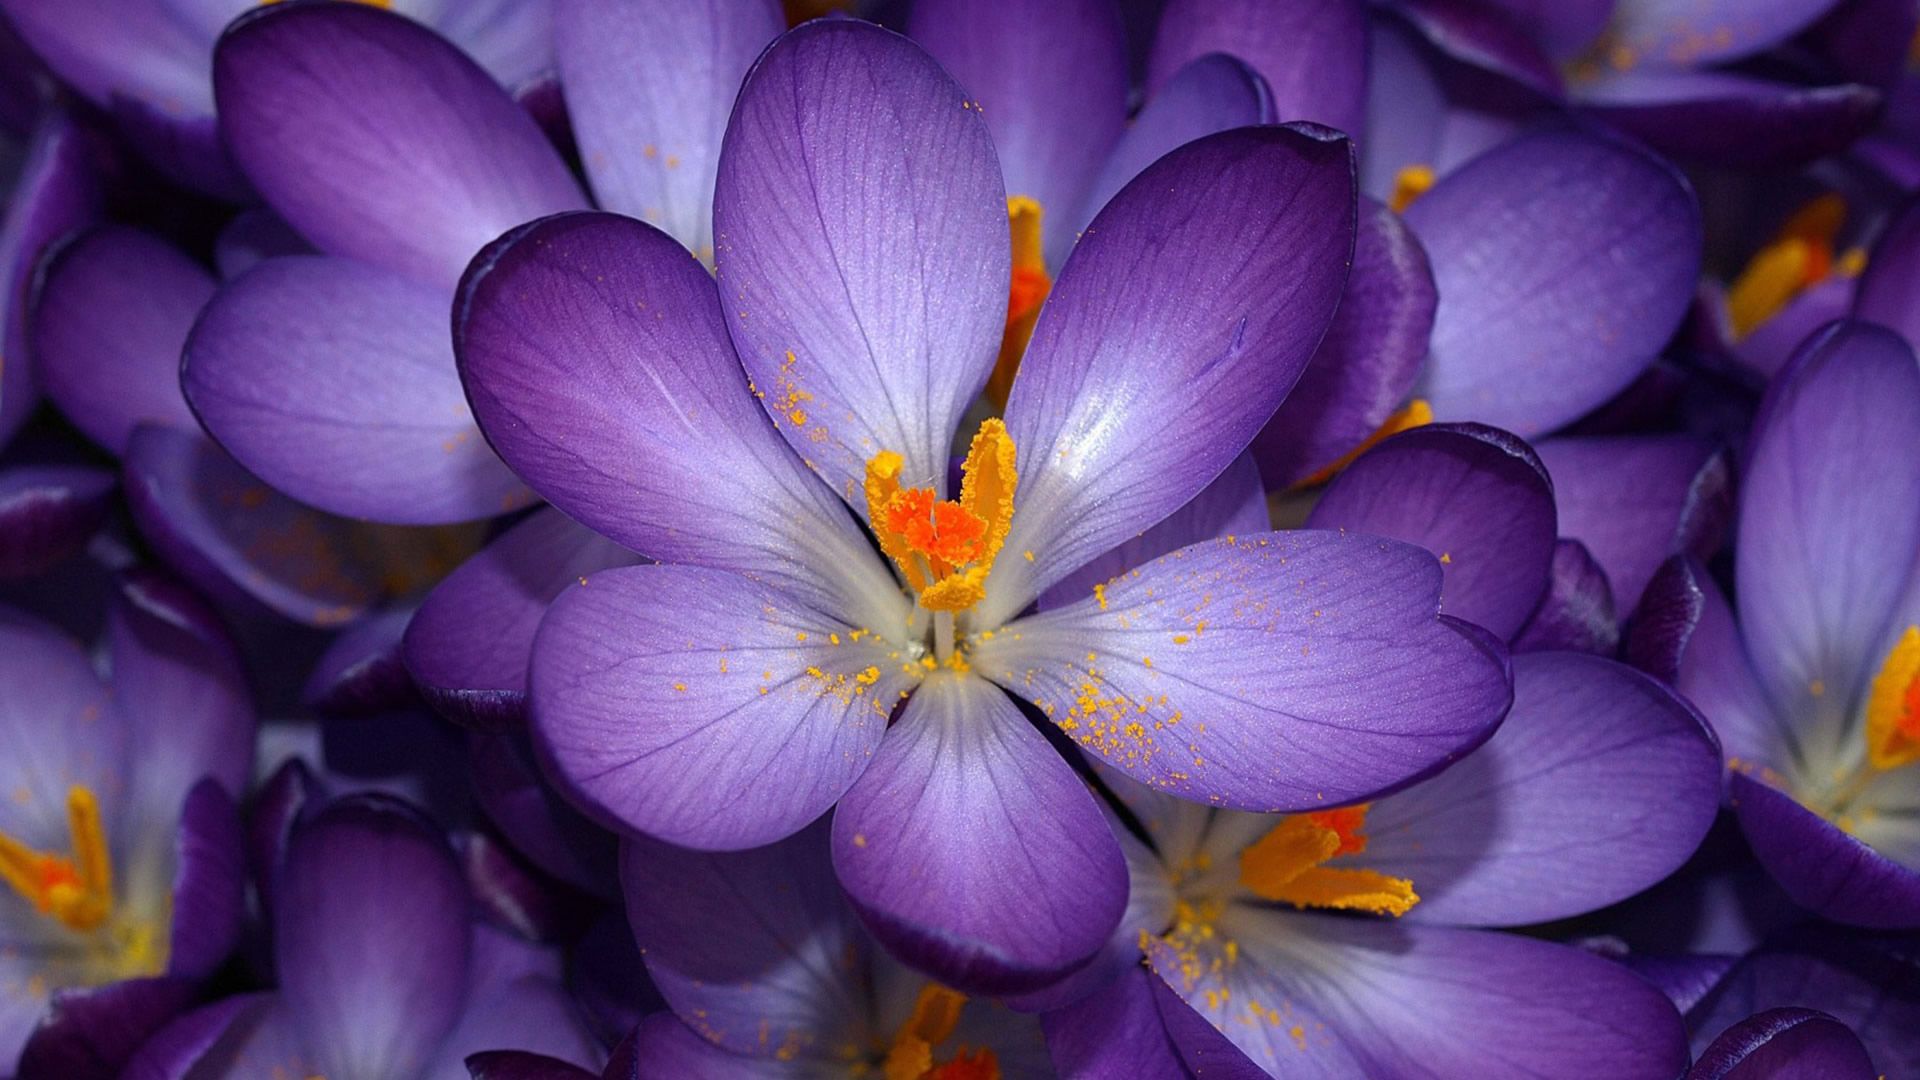 Purple Flower Wallpaper Tumblr 17818 1920x1080 px ~ HDWallSource ...